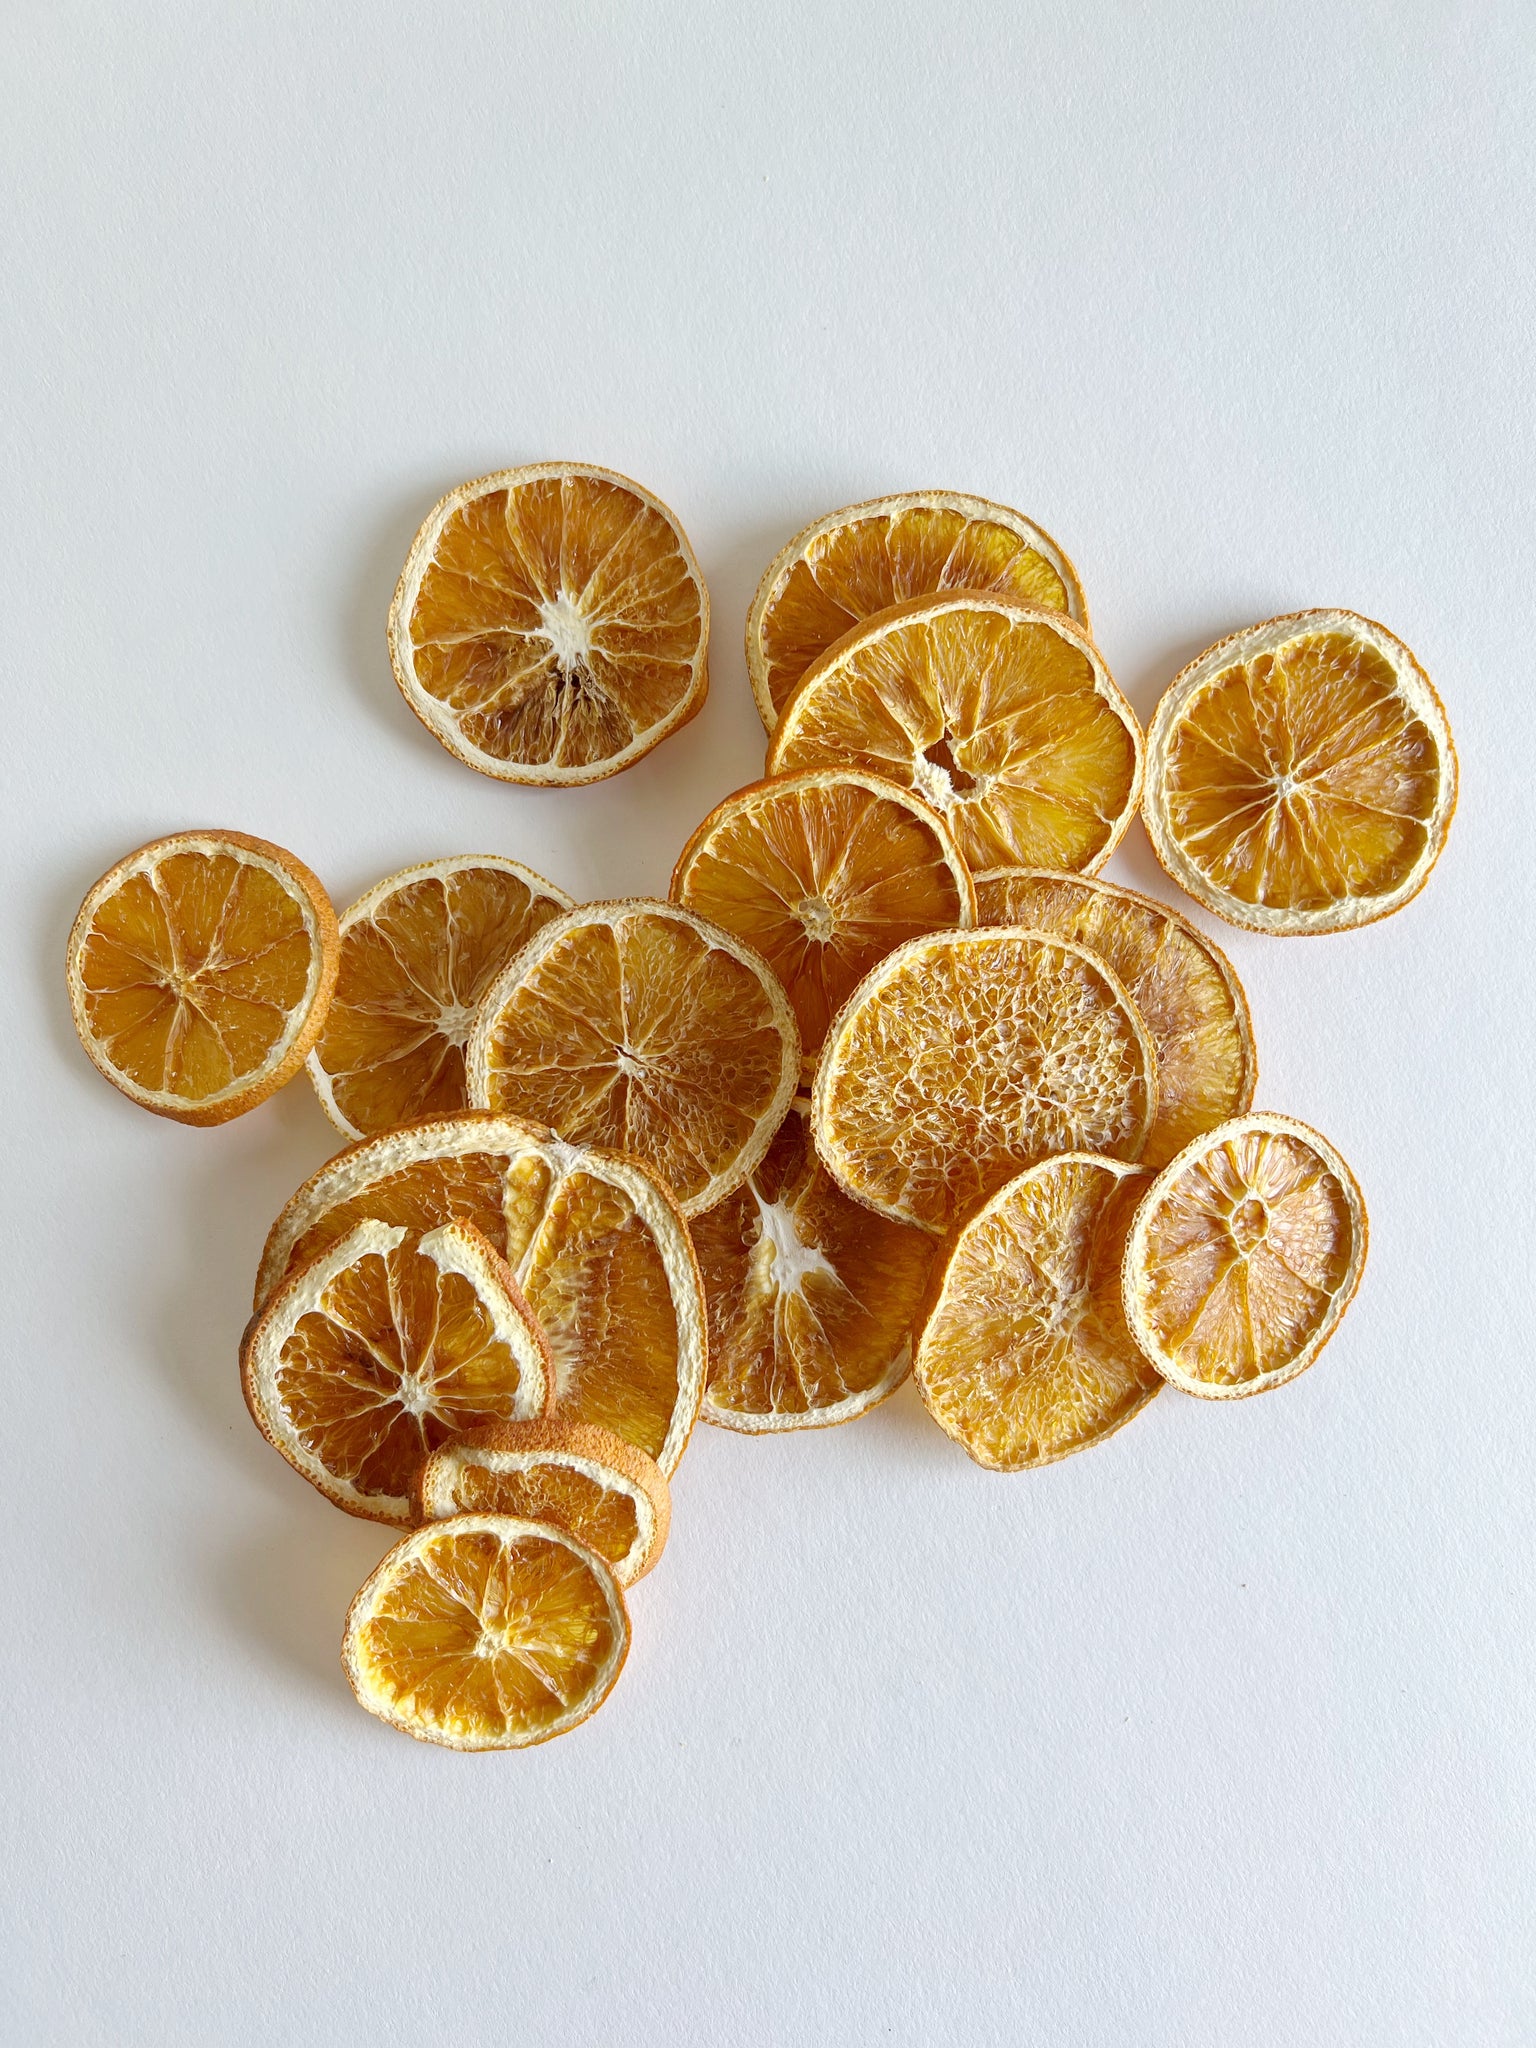 Preserved Oranges